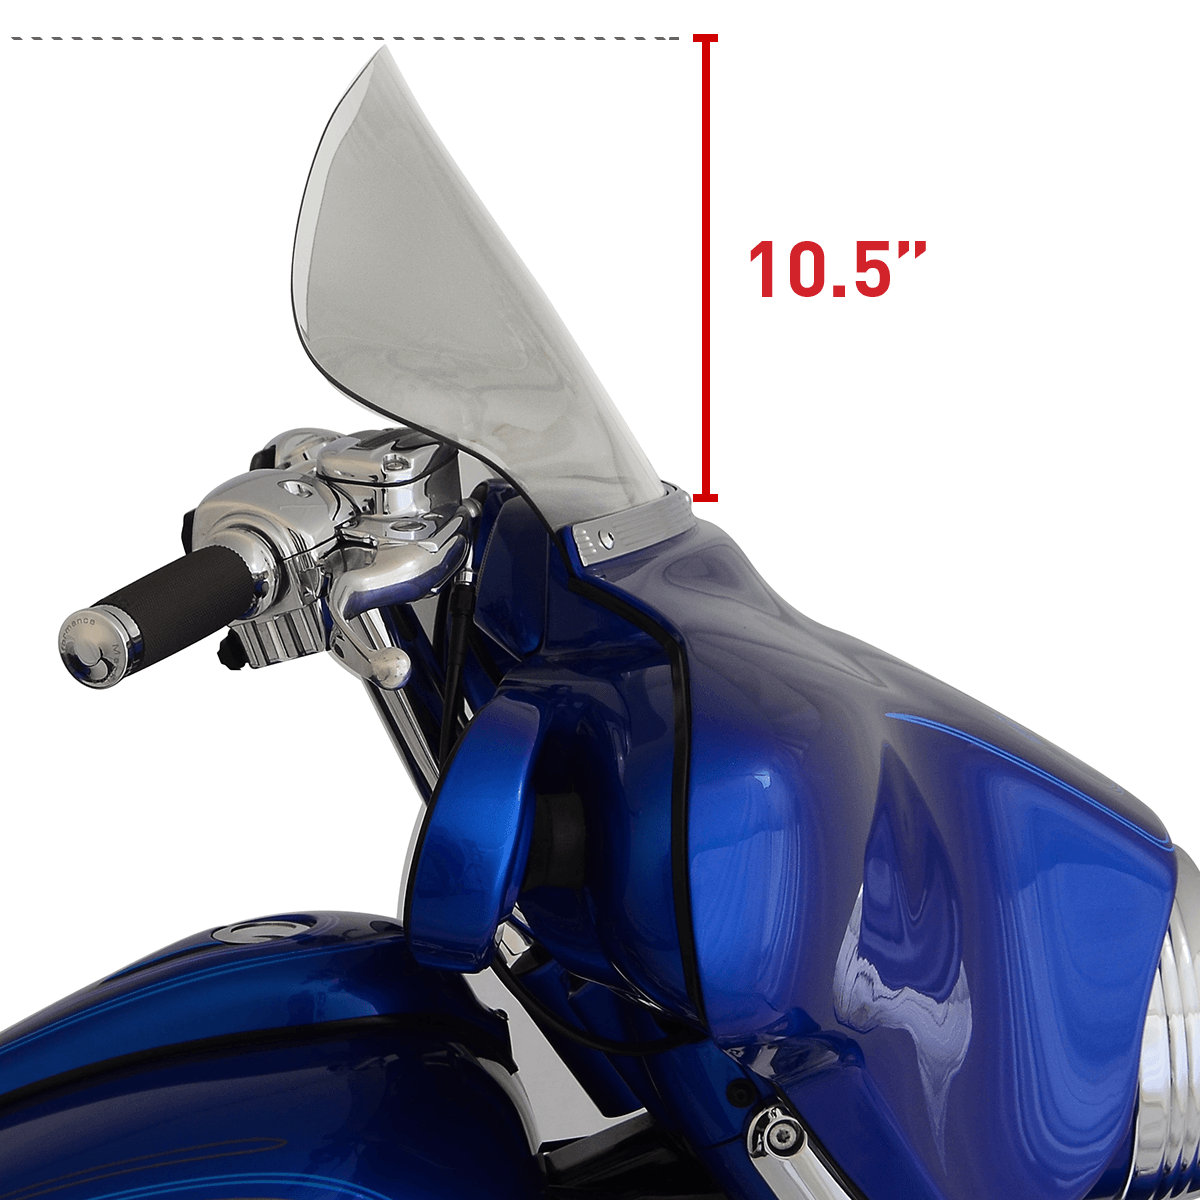 11.5" Tint Flare™ Windshield for Harley-Davidson 1996-2013 FLH Motorcycle Models